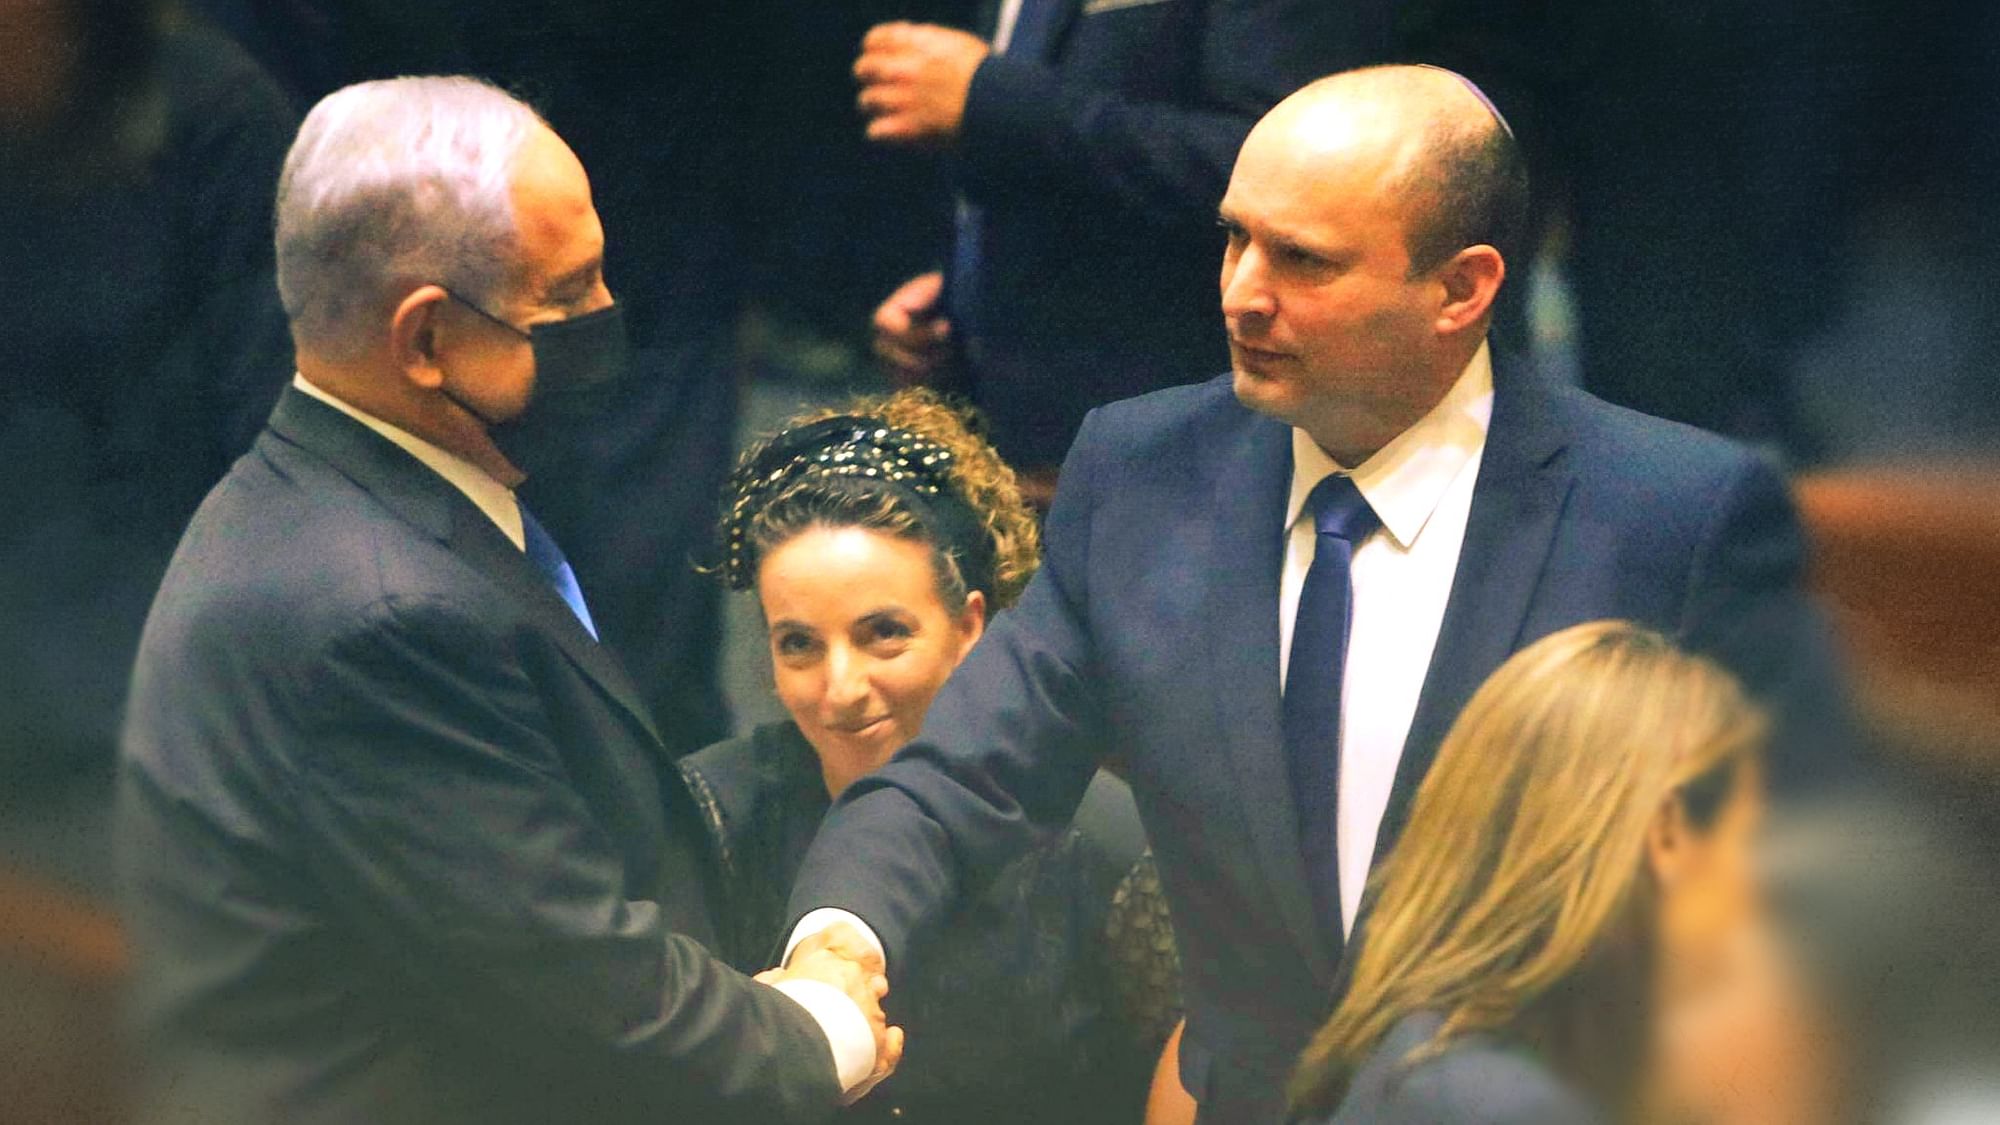 Israel’s new Prime Minister Naftali Bennett greets Benjamin Netanyahu.